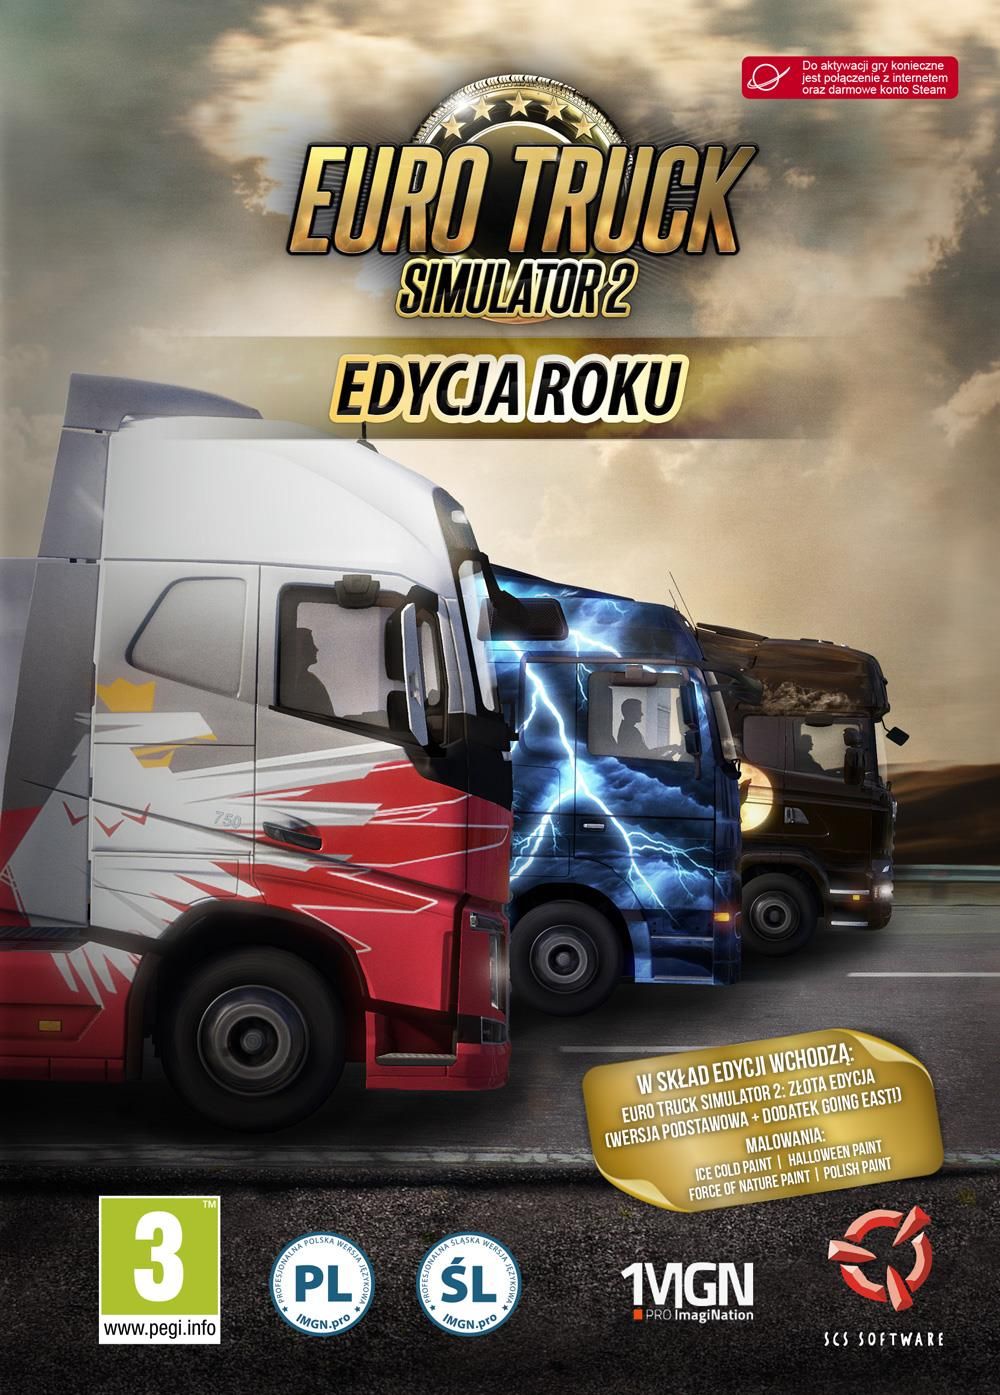 euro truck simulator 2 multiplayer steam